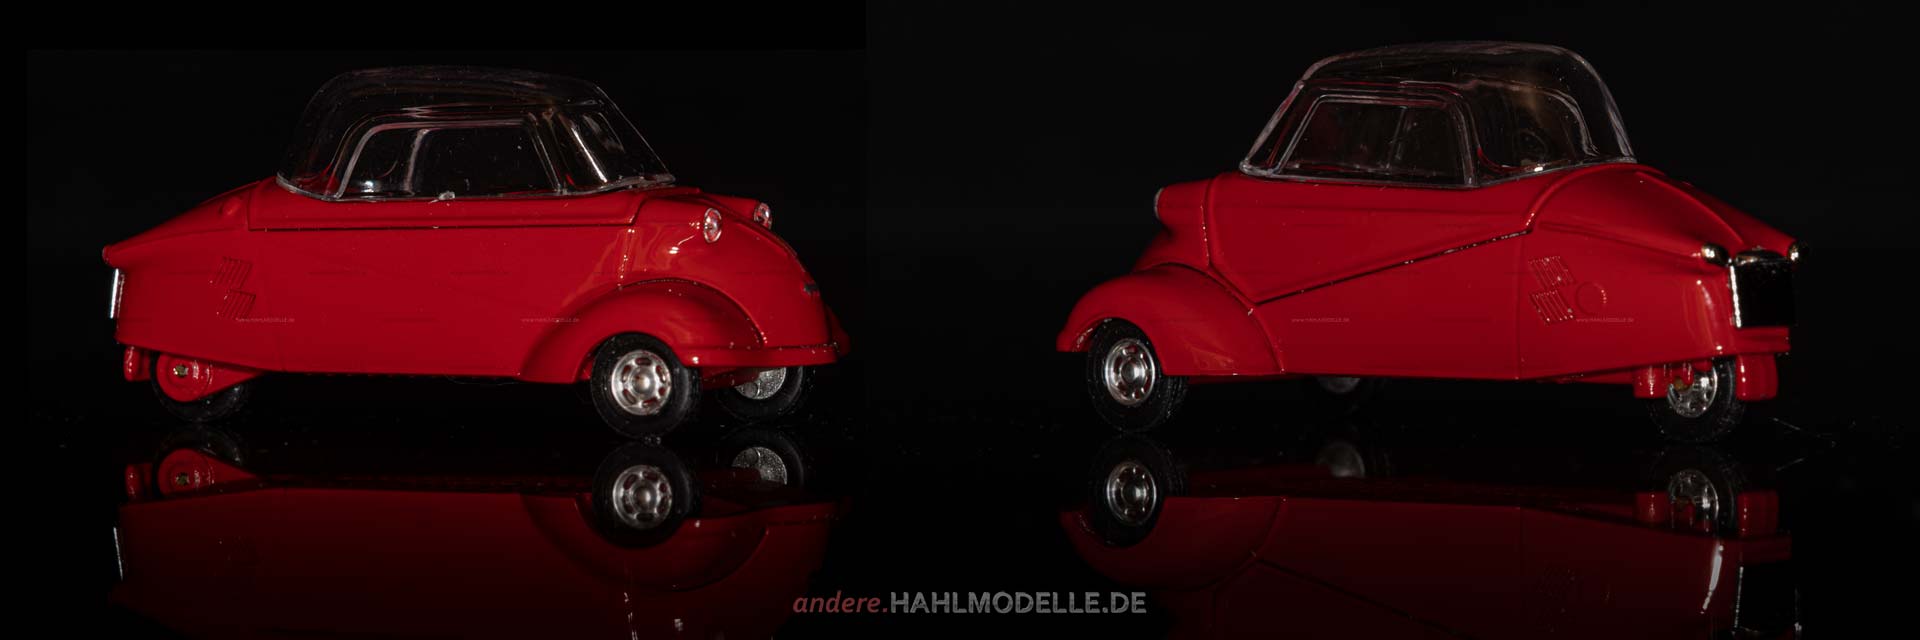 Messerschmitt Kabinenroller KR 200 | Rollermobil | Cursor | 1:43 | www.andere.hahlmodelle.de